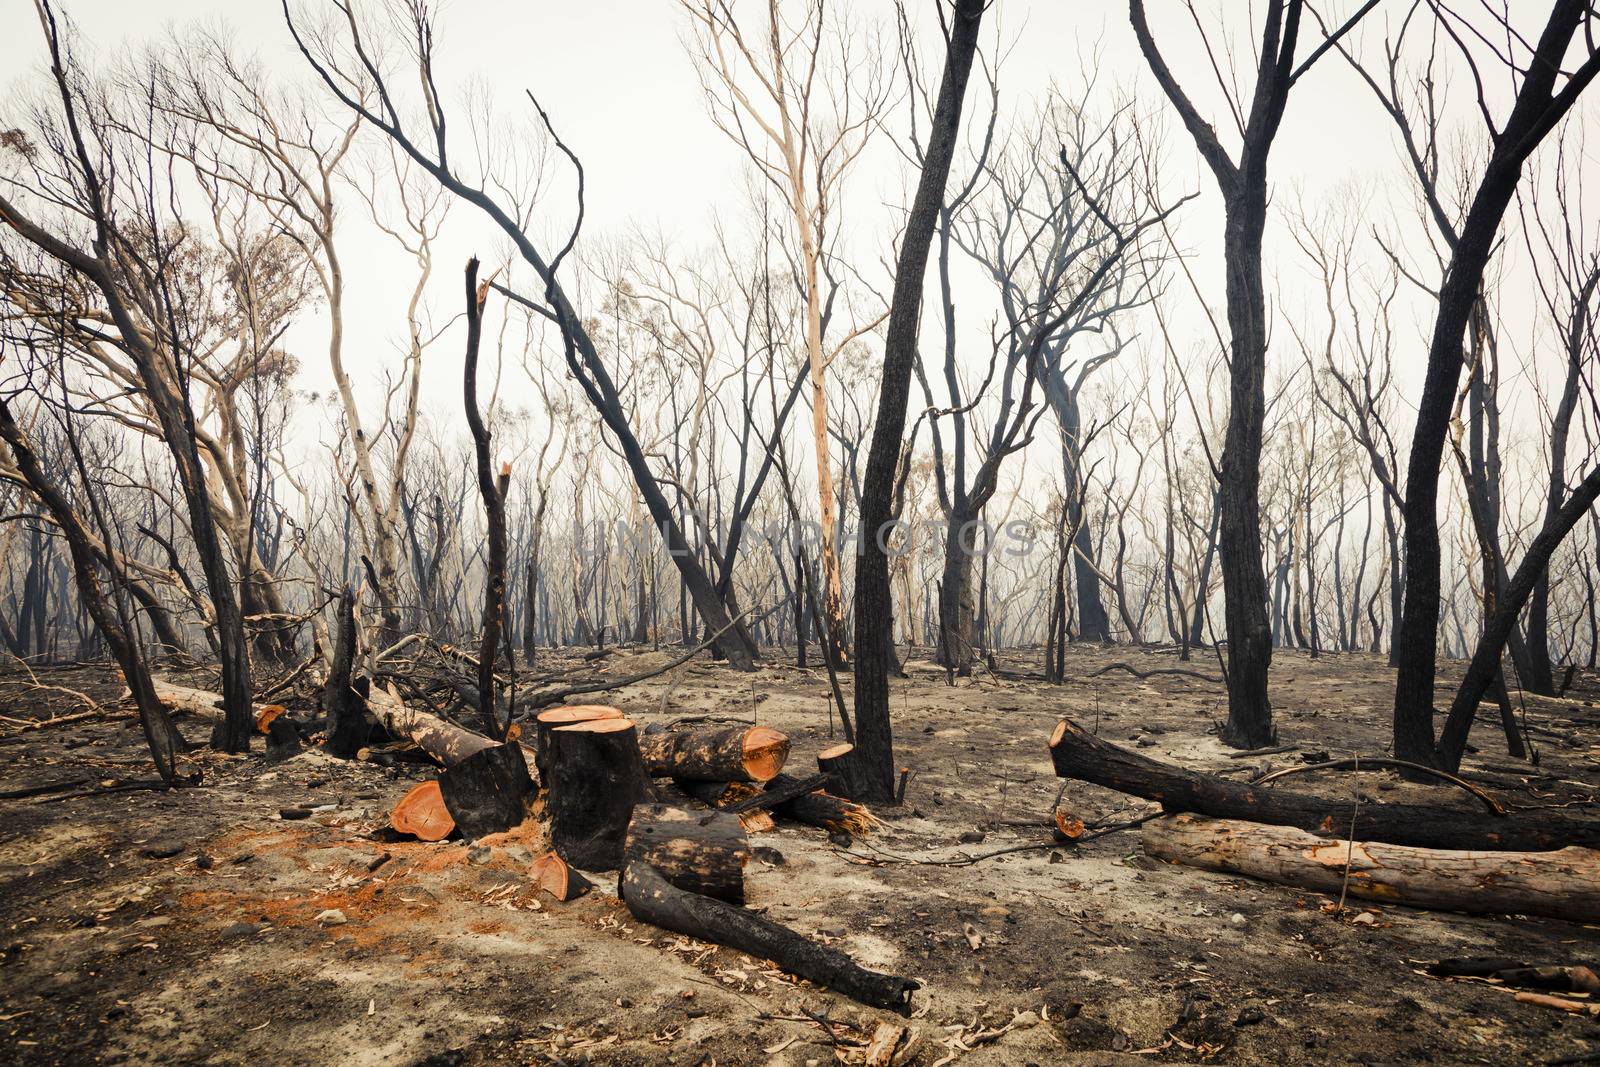 Bushfire burnt gum trees in The Blue Mountains in Australia